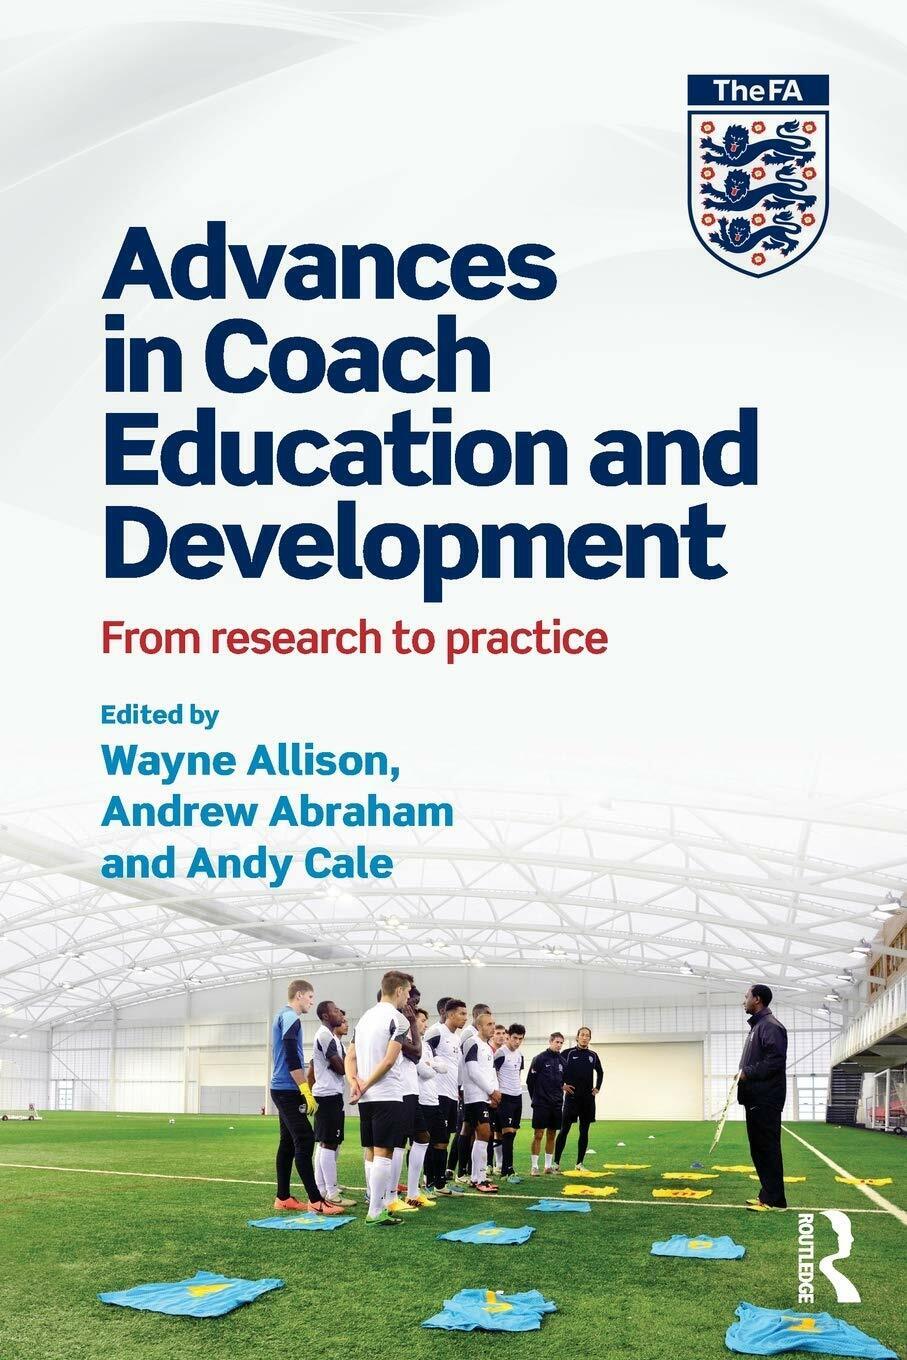 Advances in Coach Education and Development - Wayne Allison - Routledge, 2016 libro usato